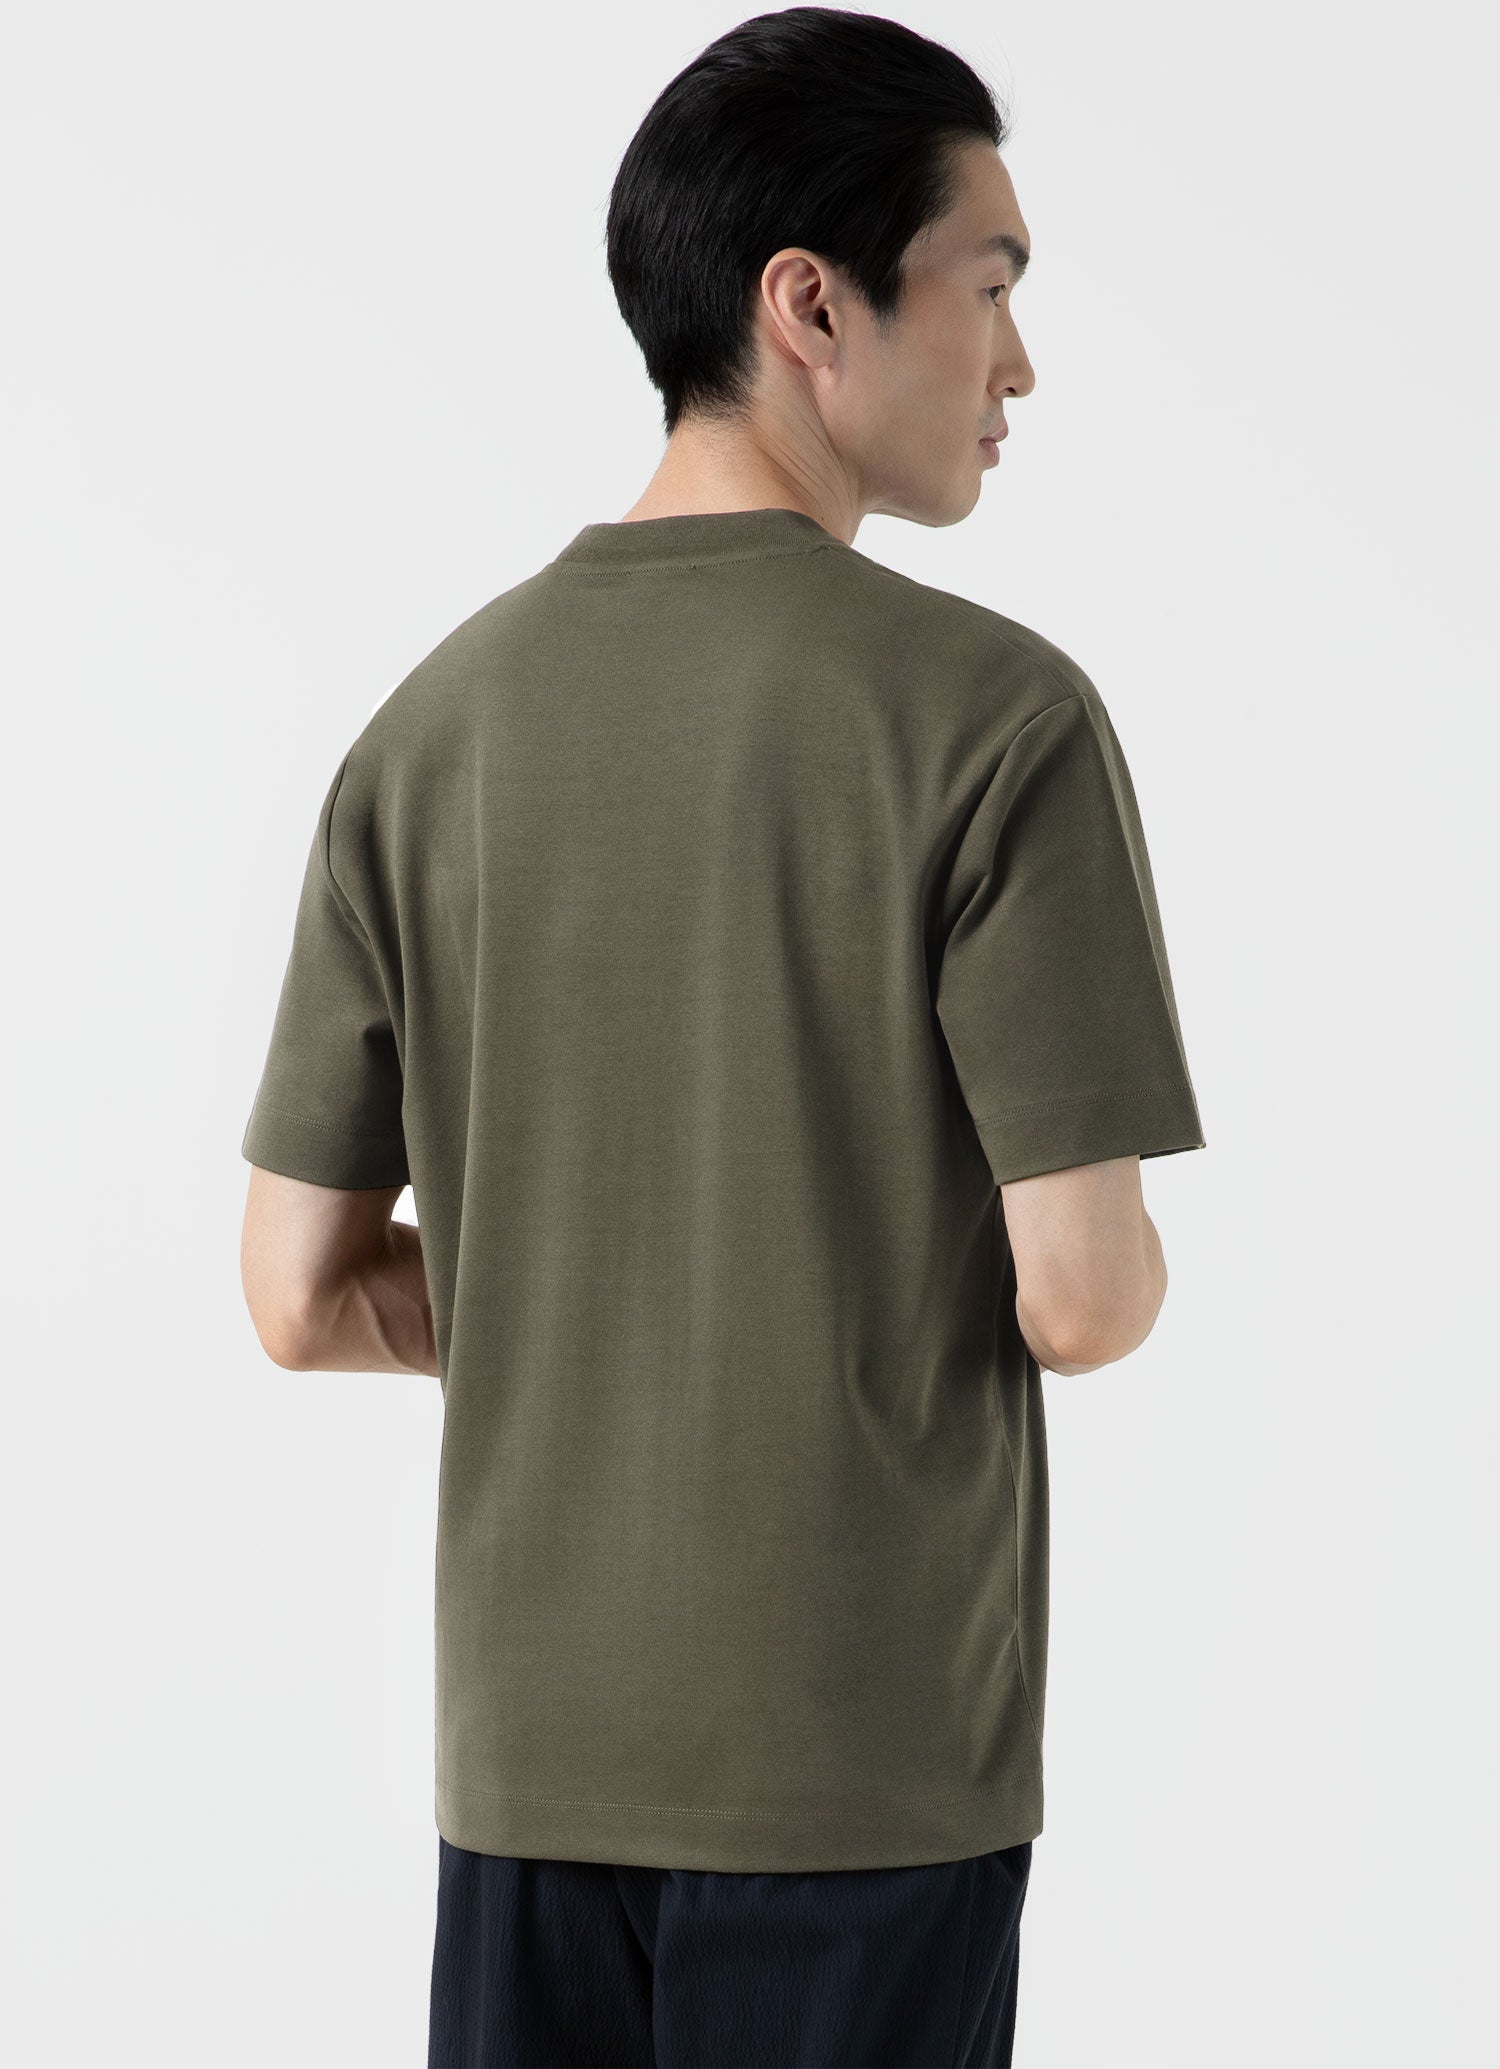 Men's Relaxed Fit Heavyweight T-shirt in Khaki